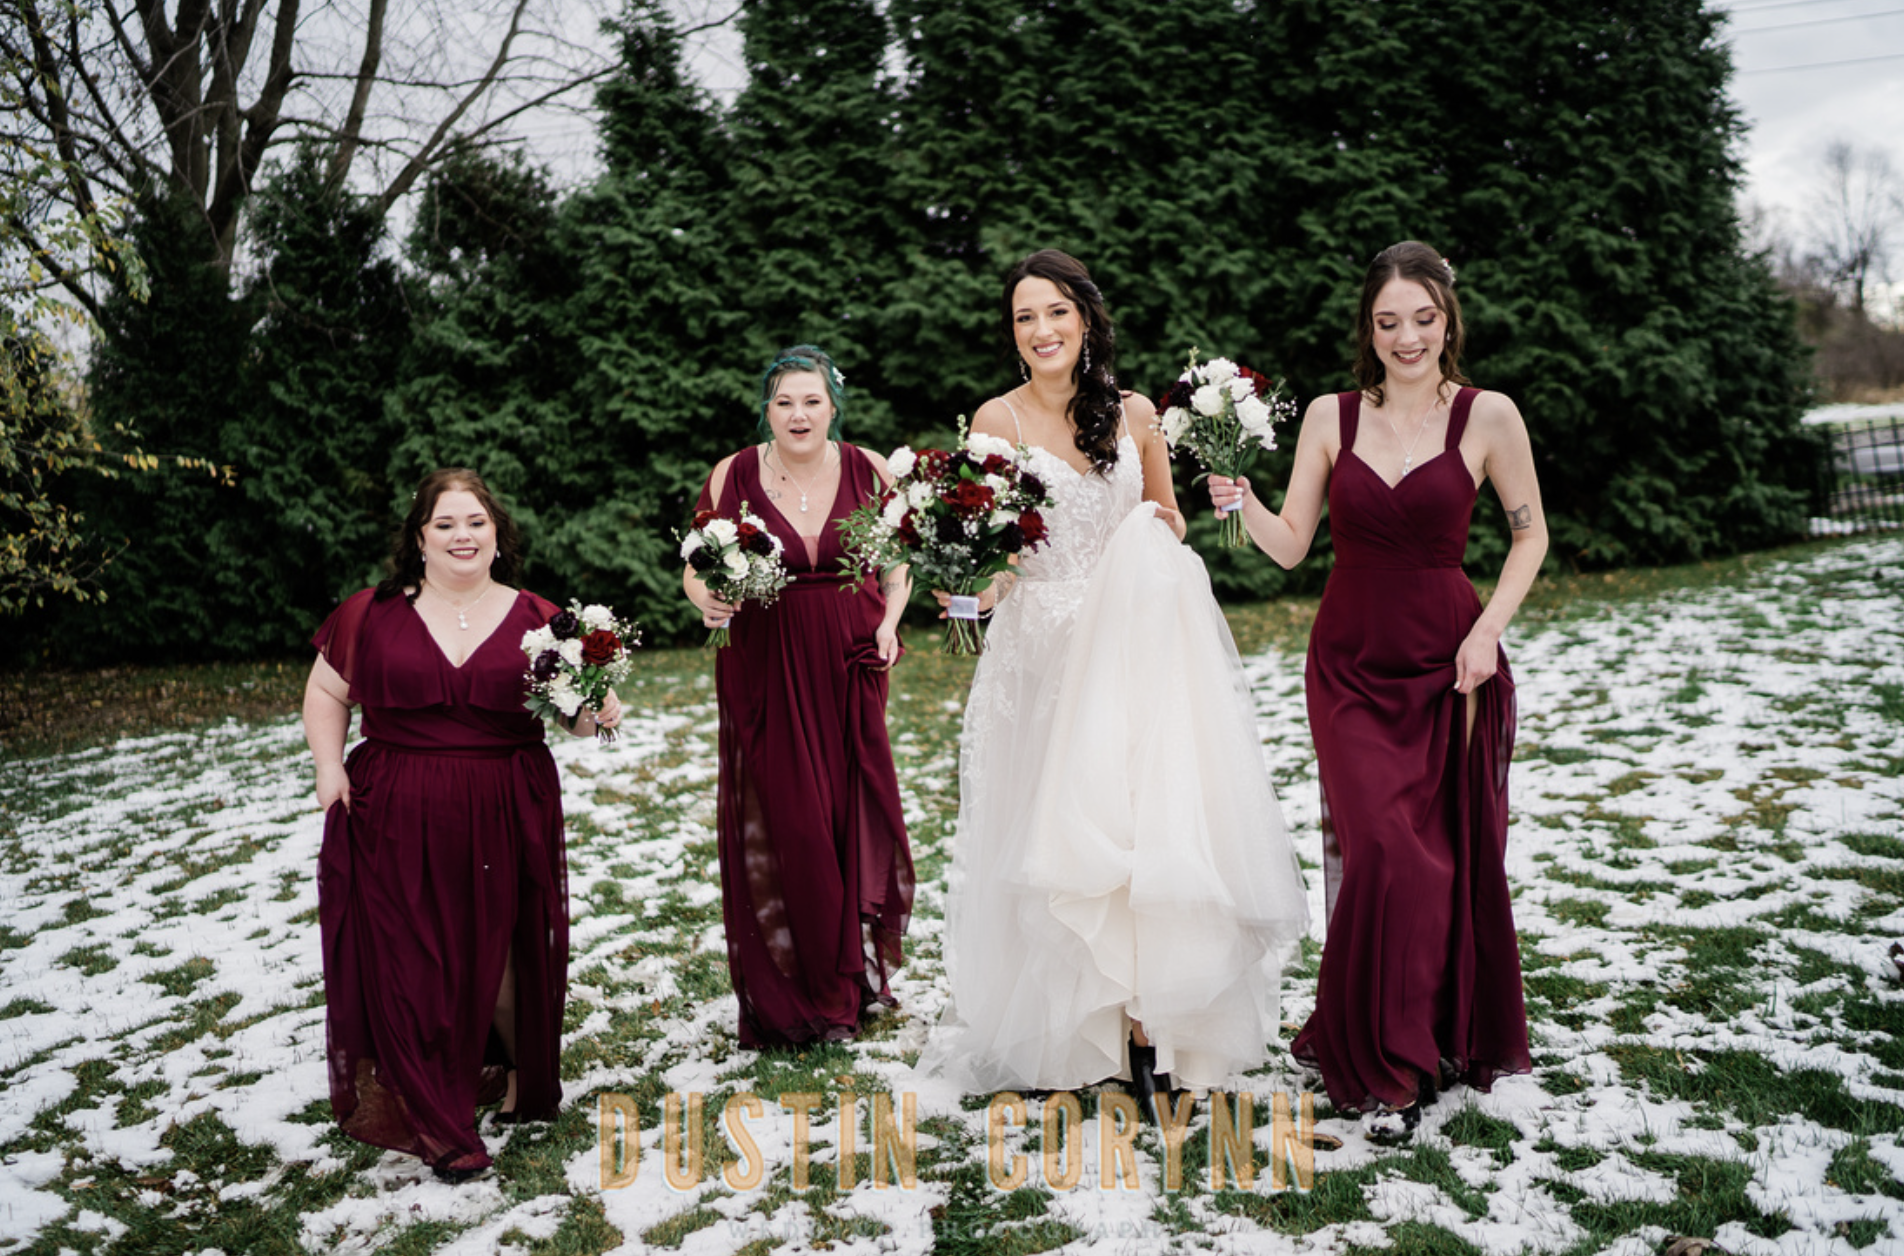 Fort Wayne wedding photographer captures bridal party walking through snow during bridal portraits